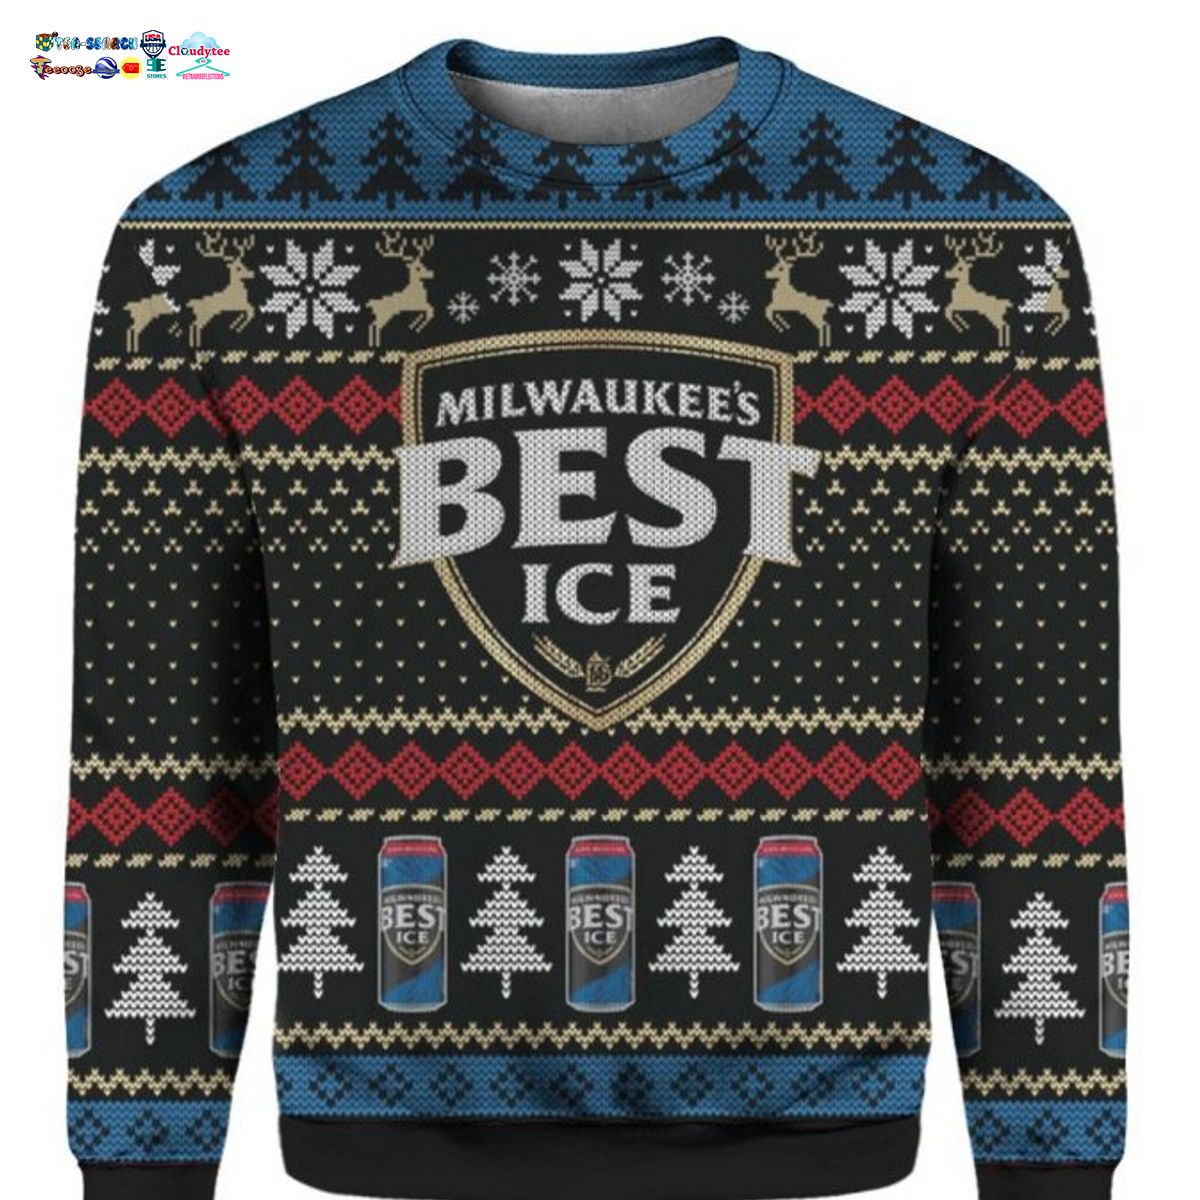 Milwaukee’s Best Ice Ugly Christmas Sweater